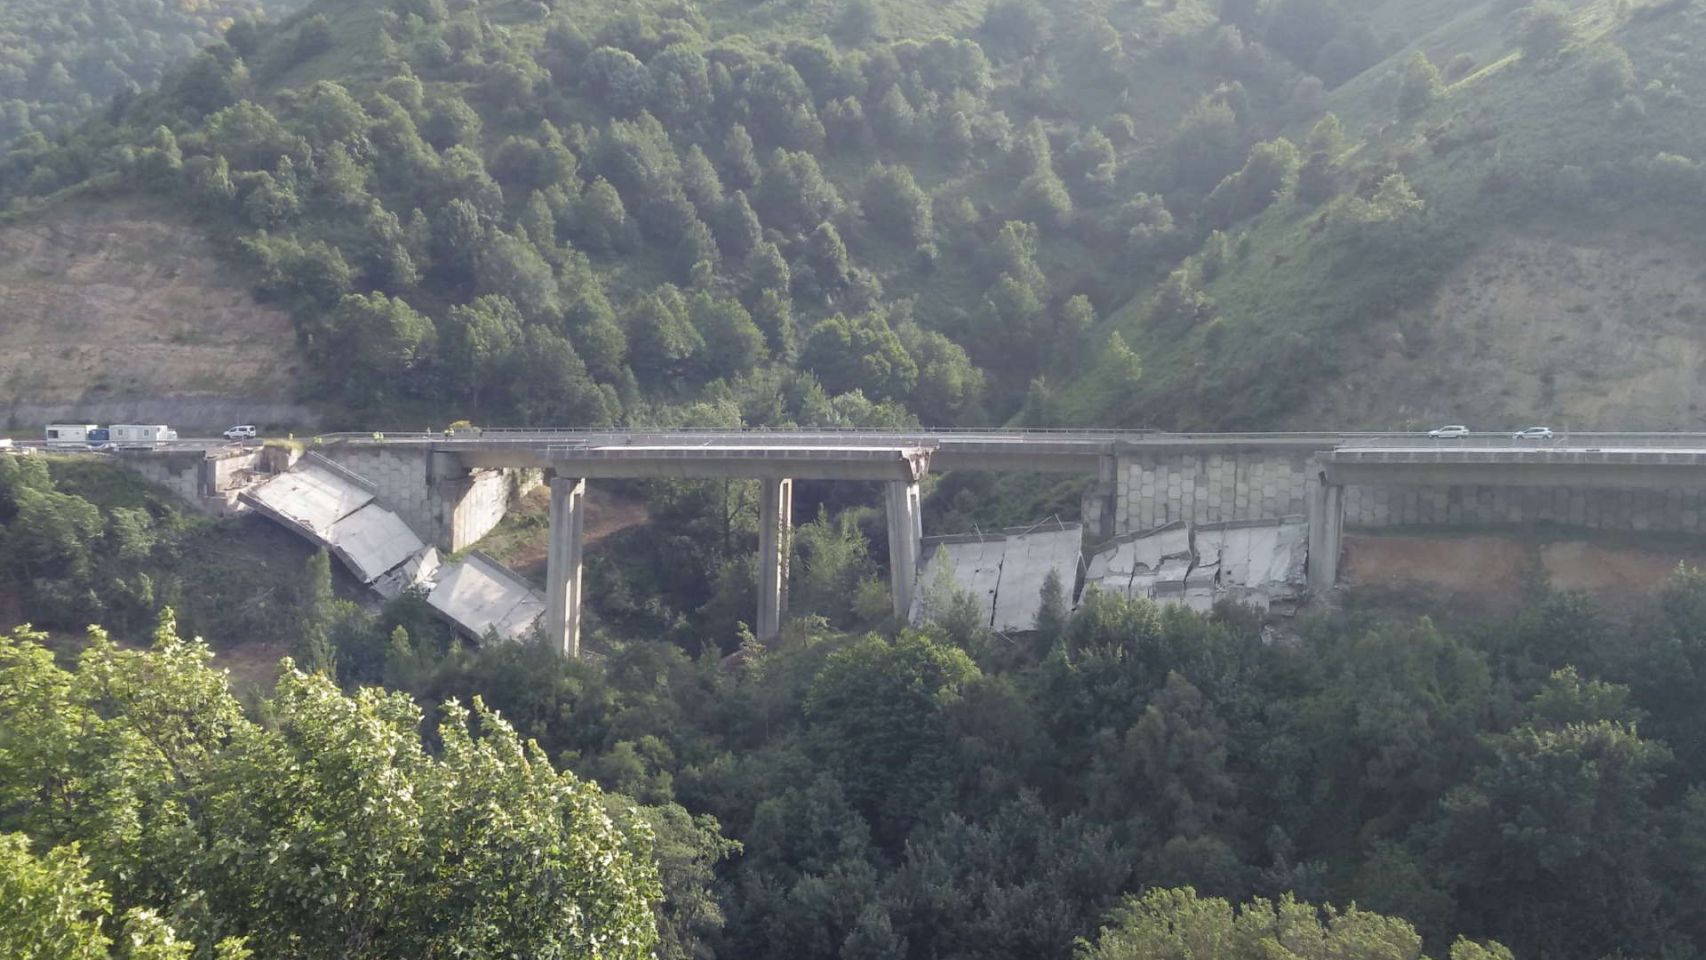 viaducto-a6-derrumbe-1-1706x960.jpg